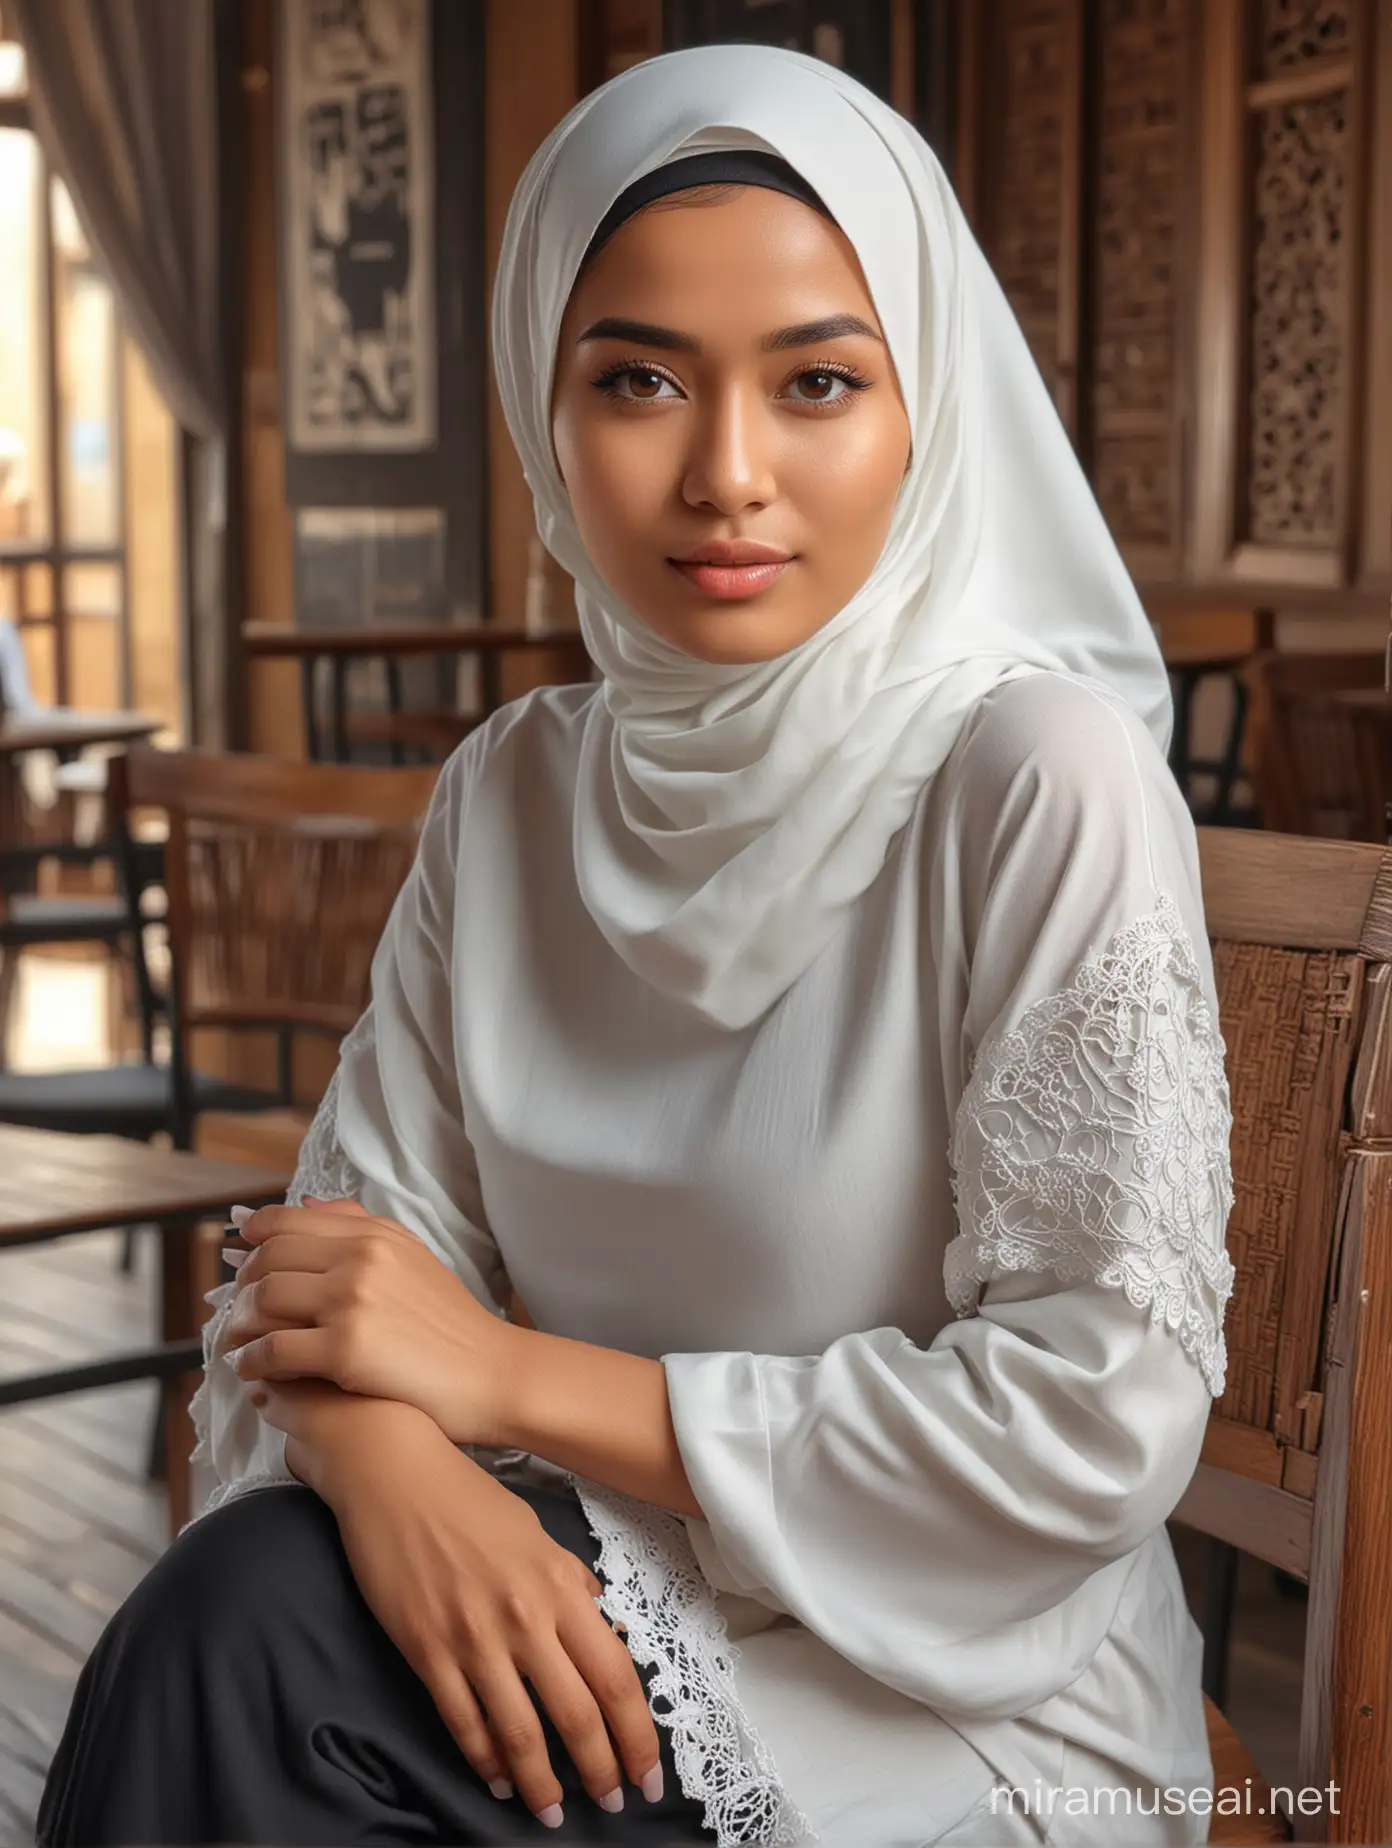 Graceful Indonesian Woman Wearing Hijab Sitting in Caf